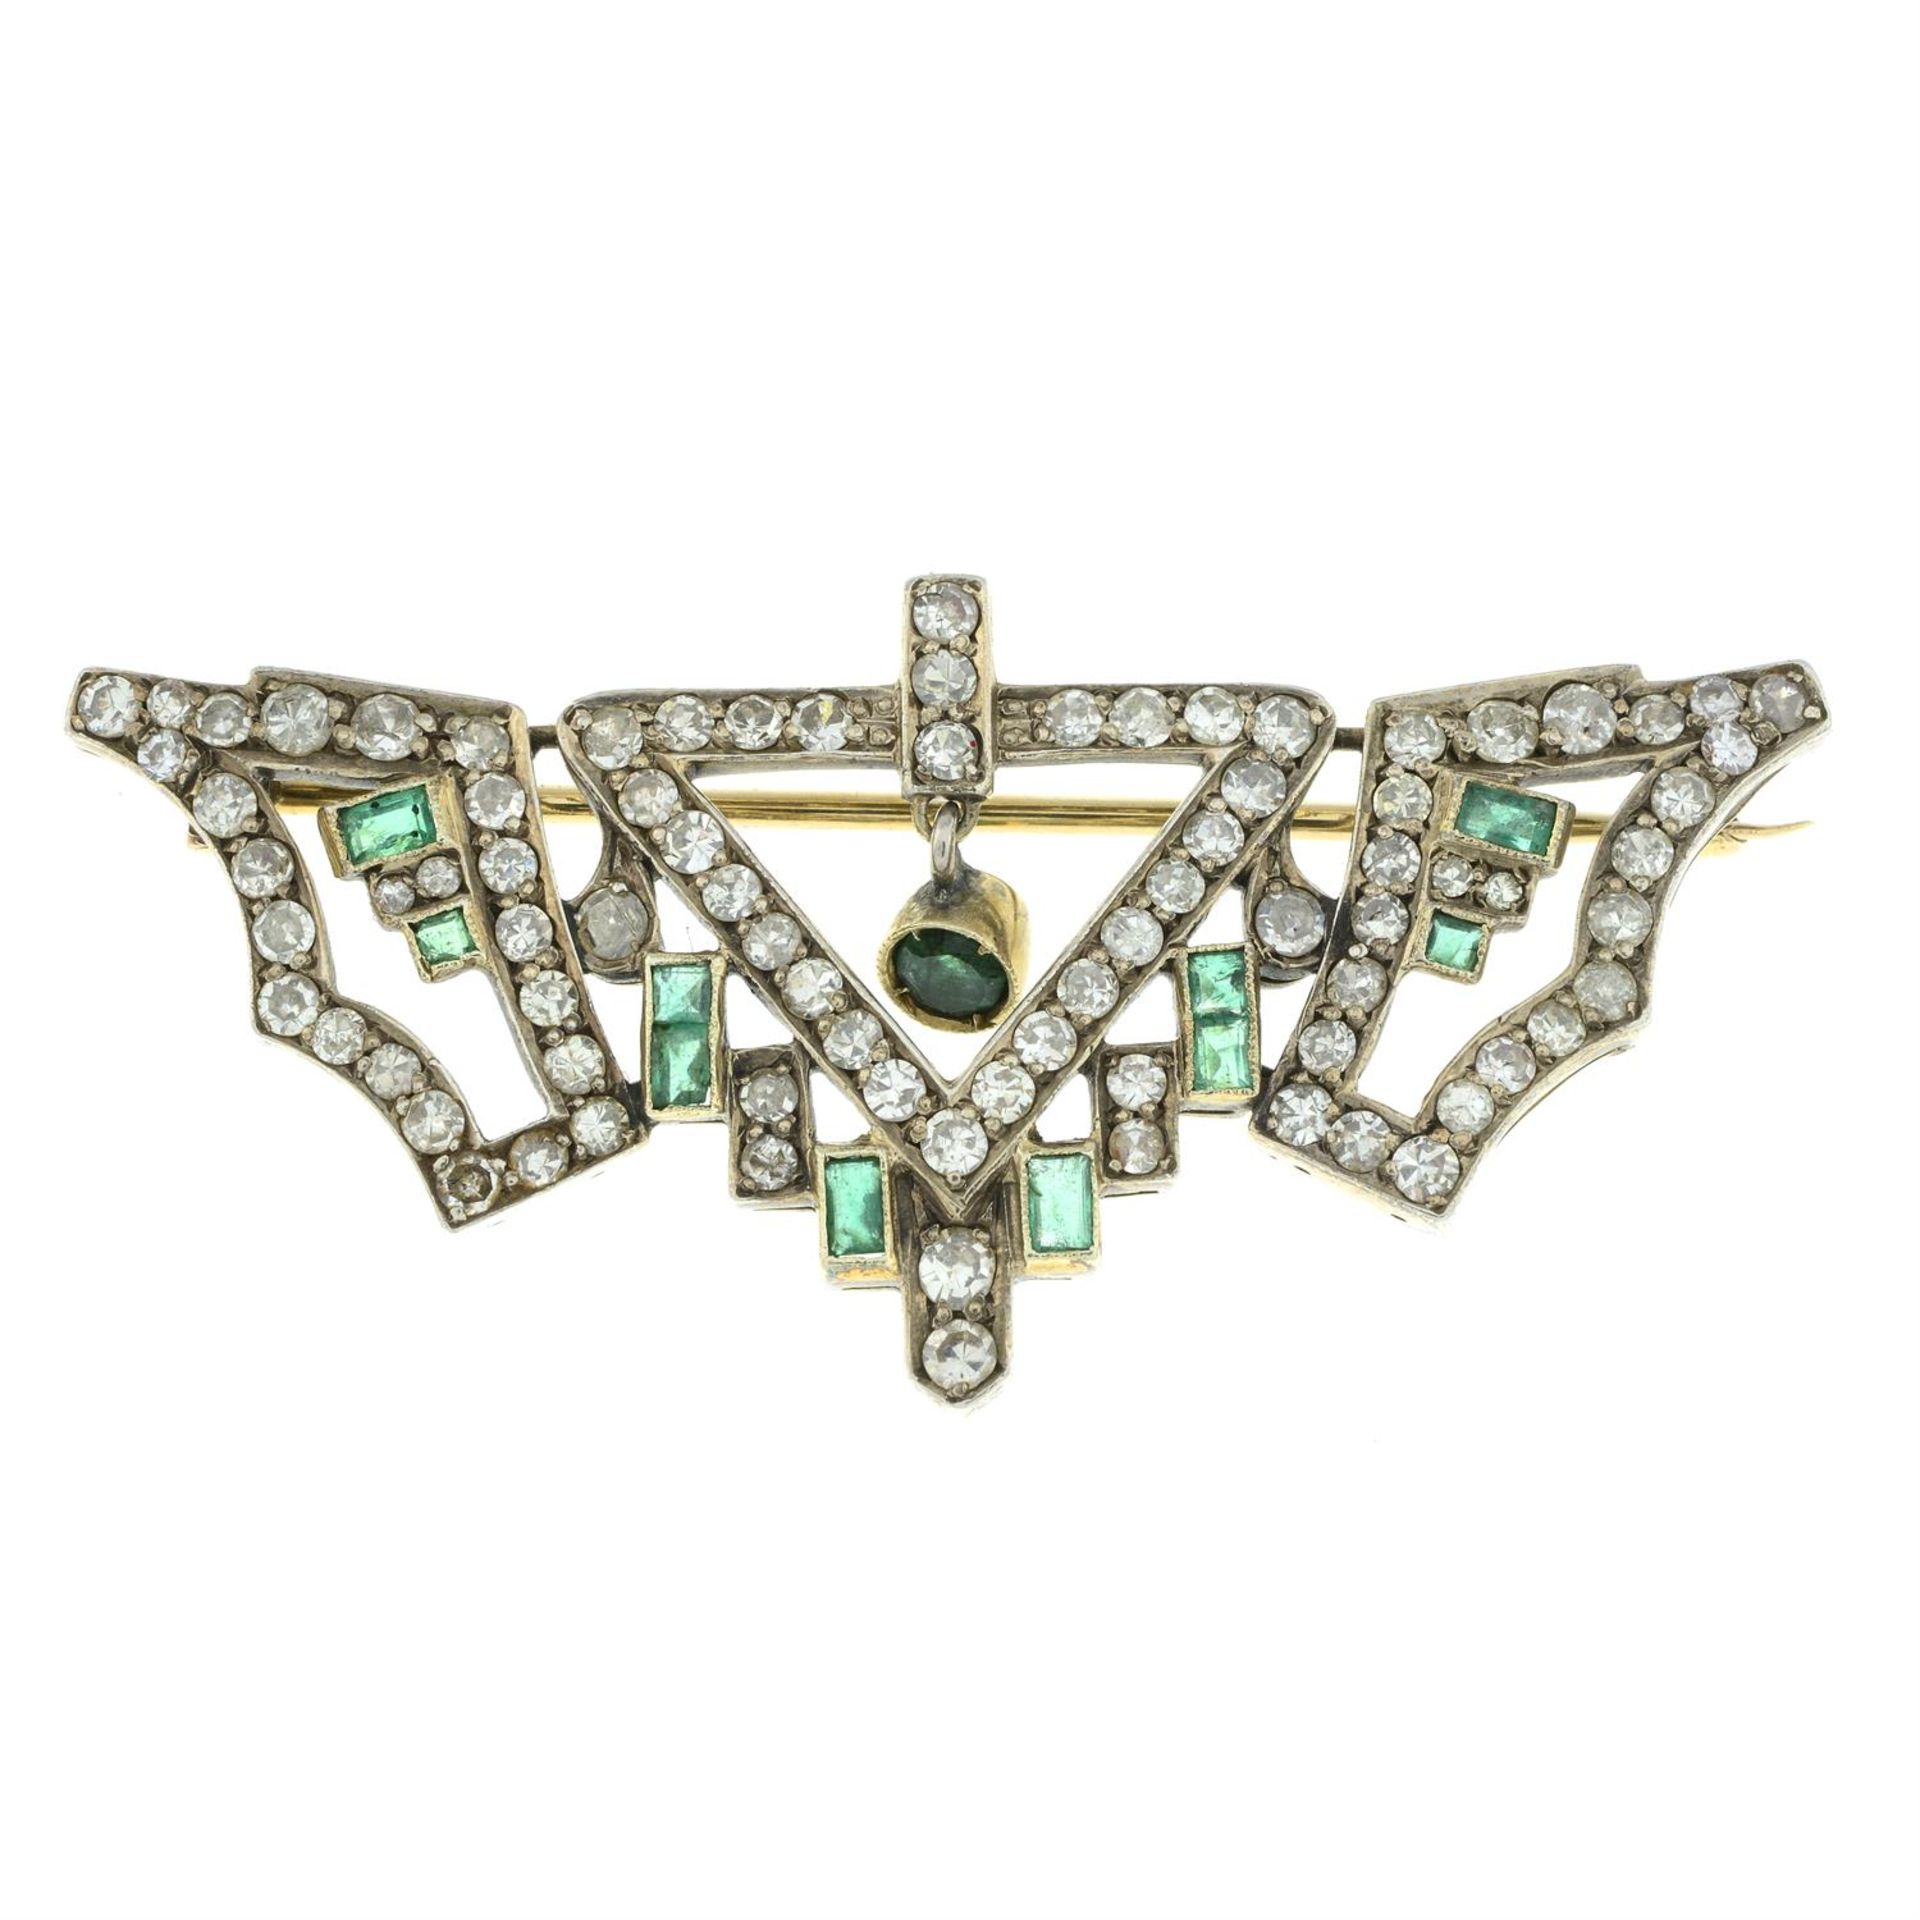 Early 20th century diamond & emerald brooch